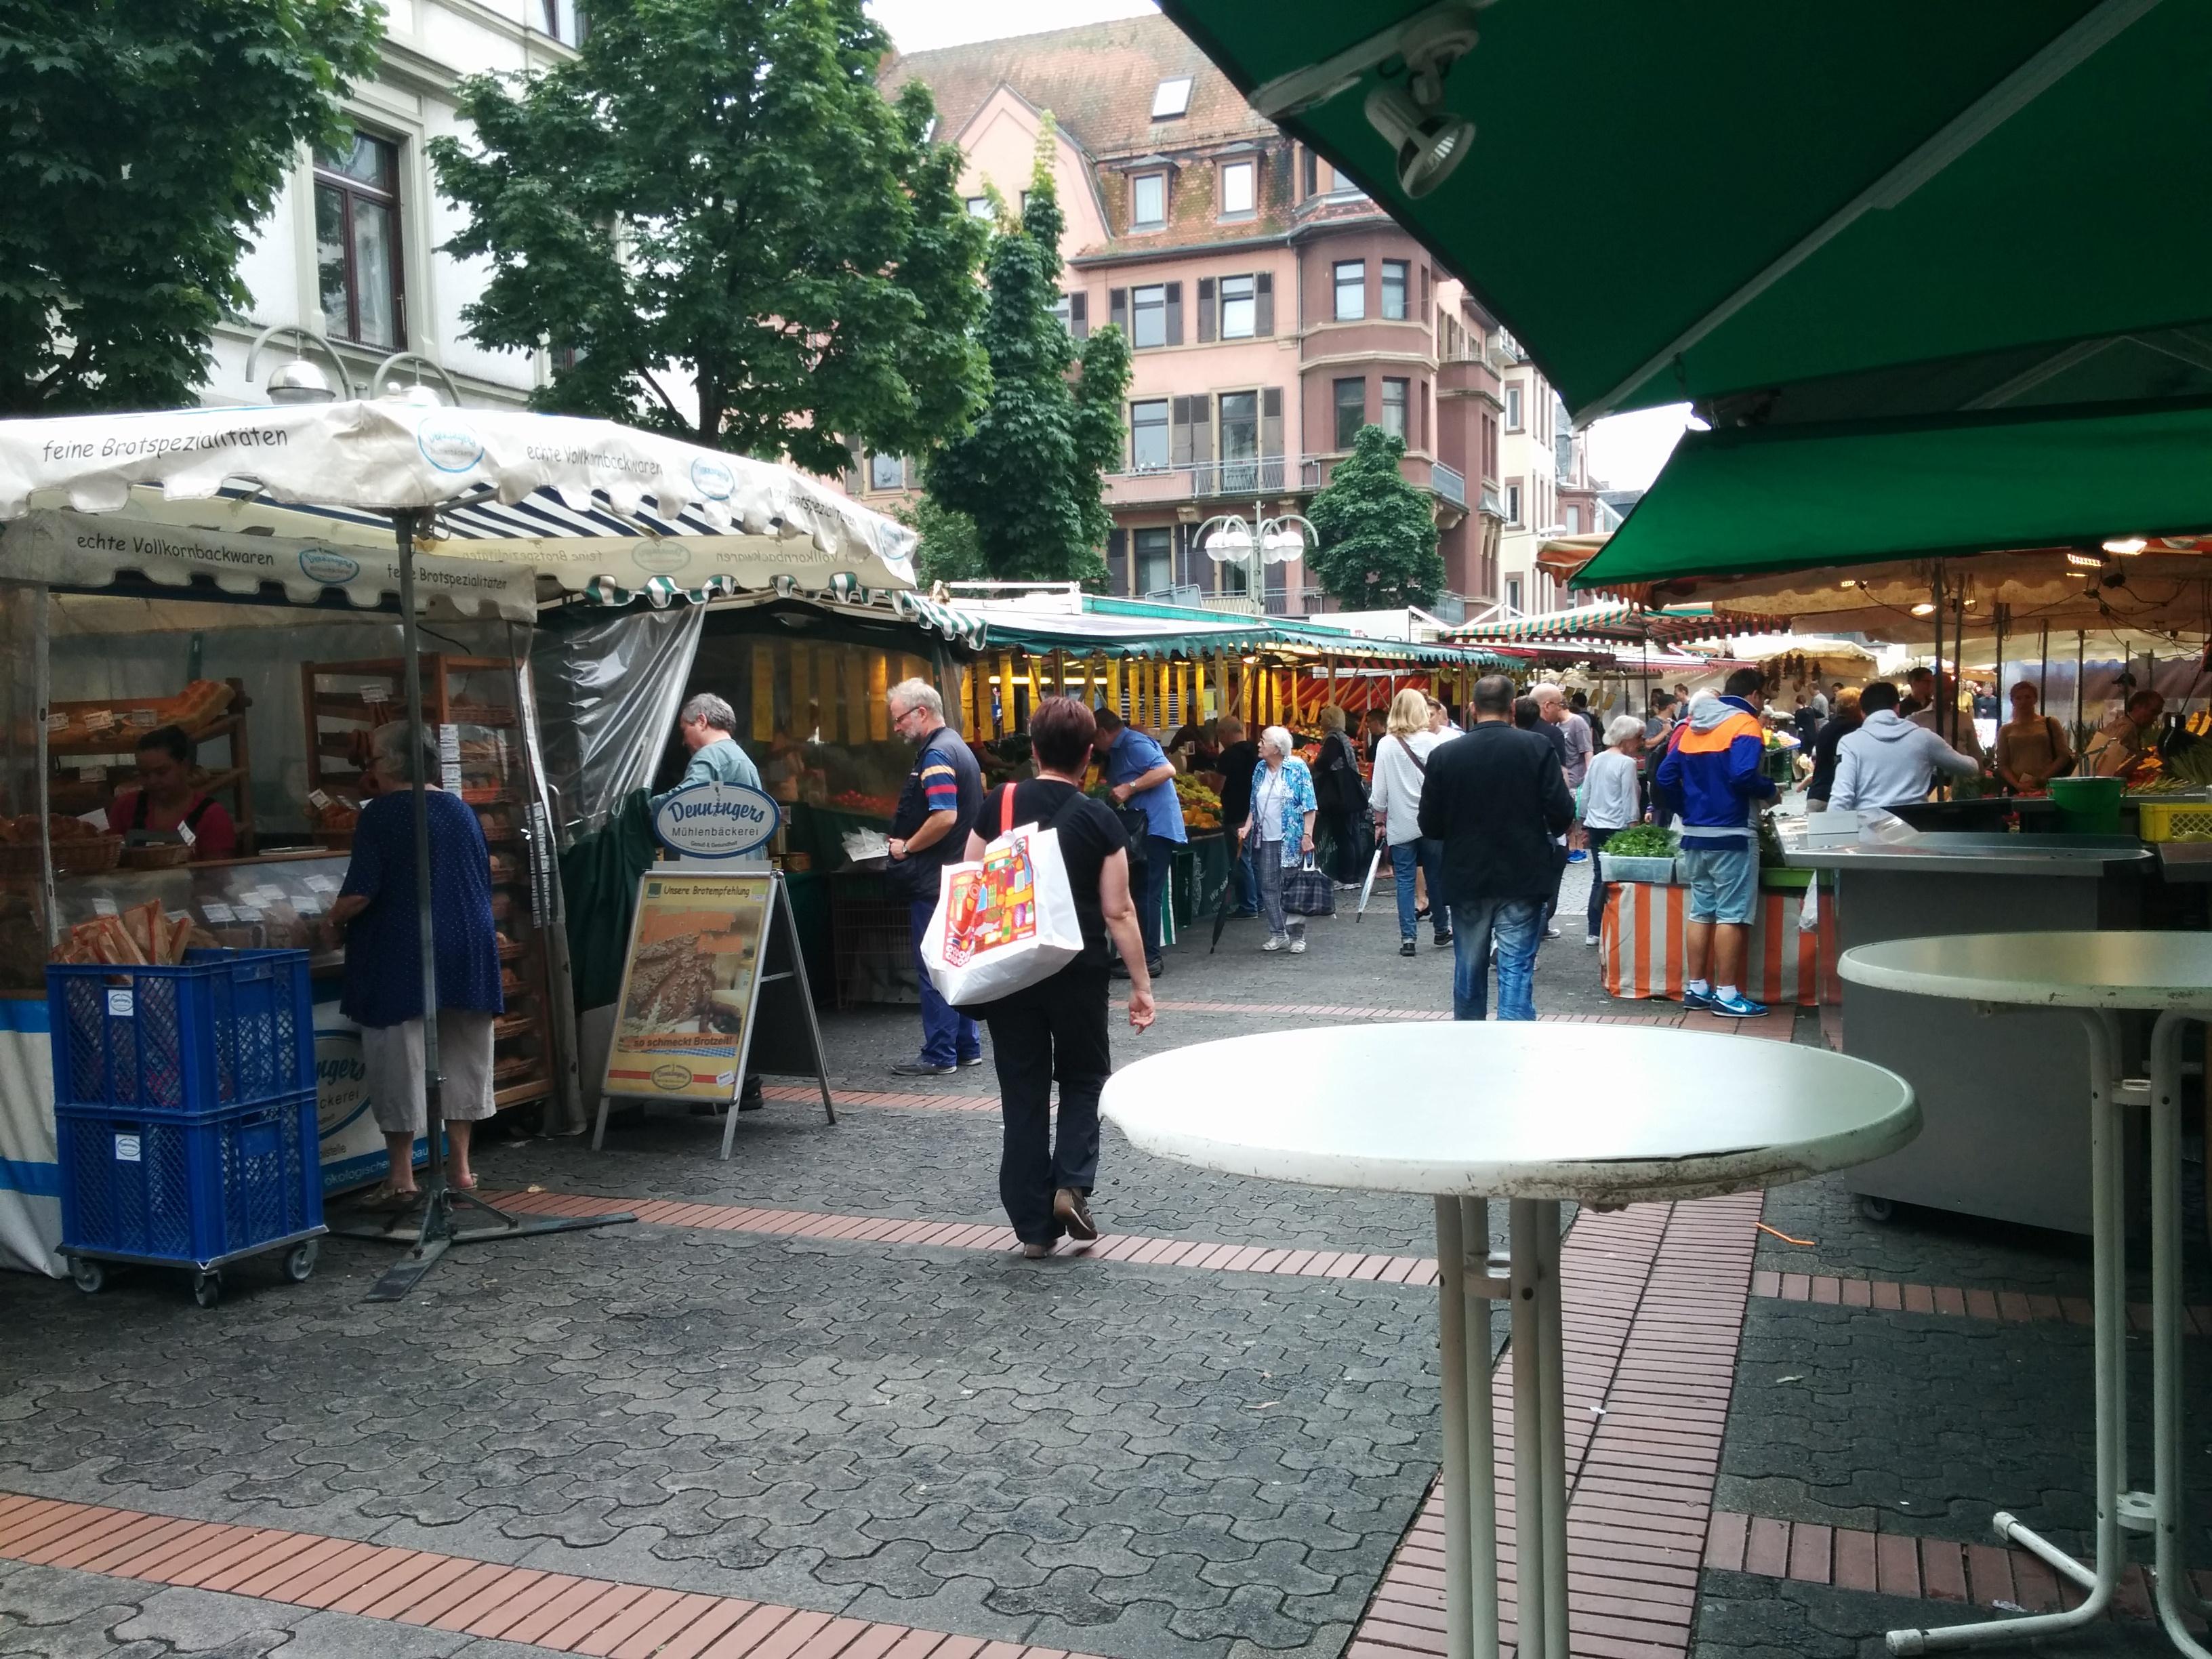 Cover image of this place Wochenmarkt am Uhrtürmchen